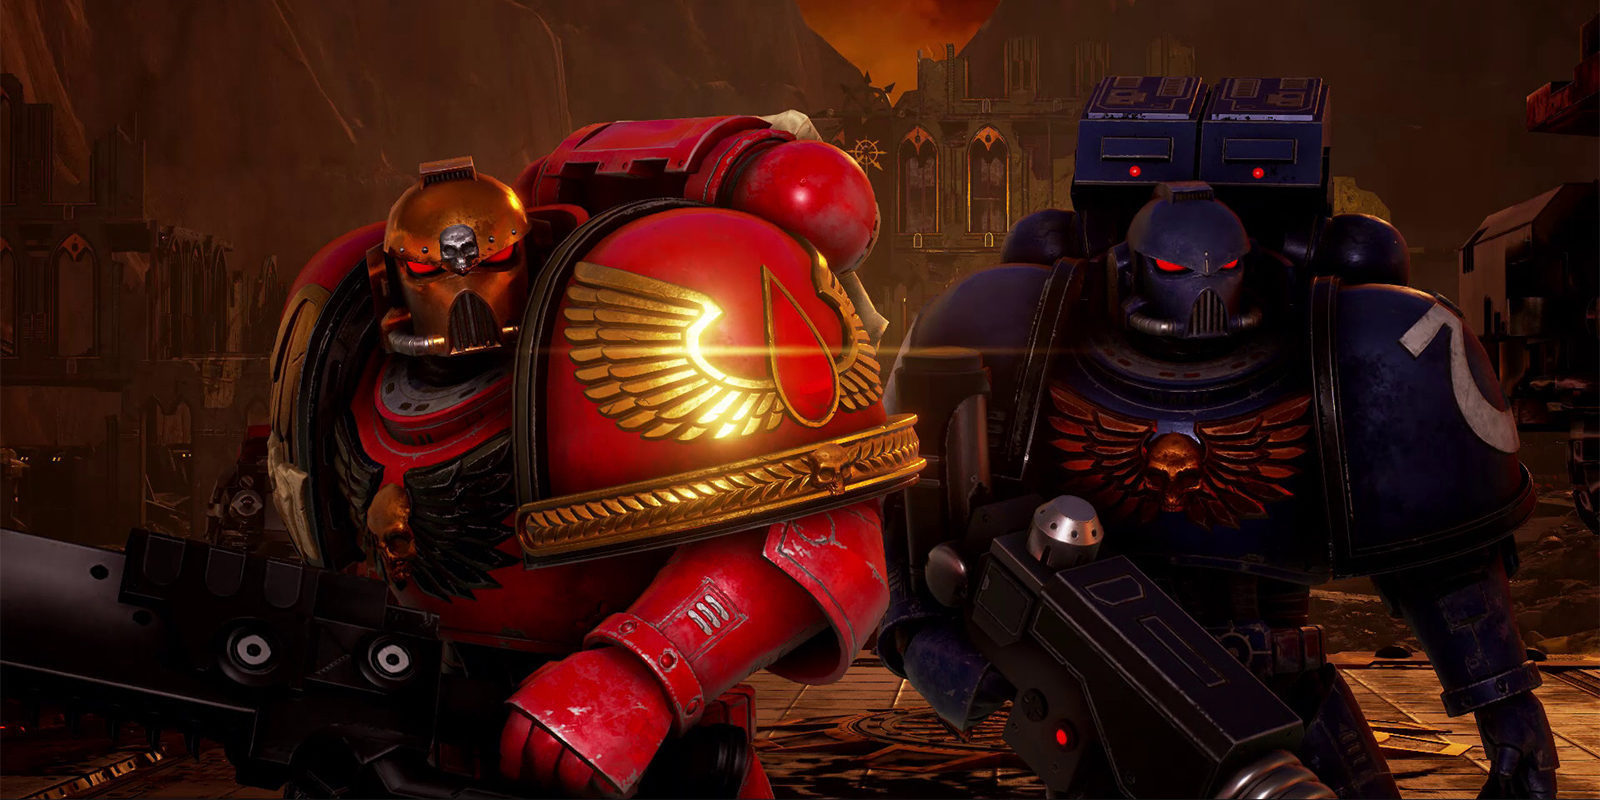 Juega gratis a 'Warhammer 40.000: Eternal Crusade' en Steam